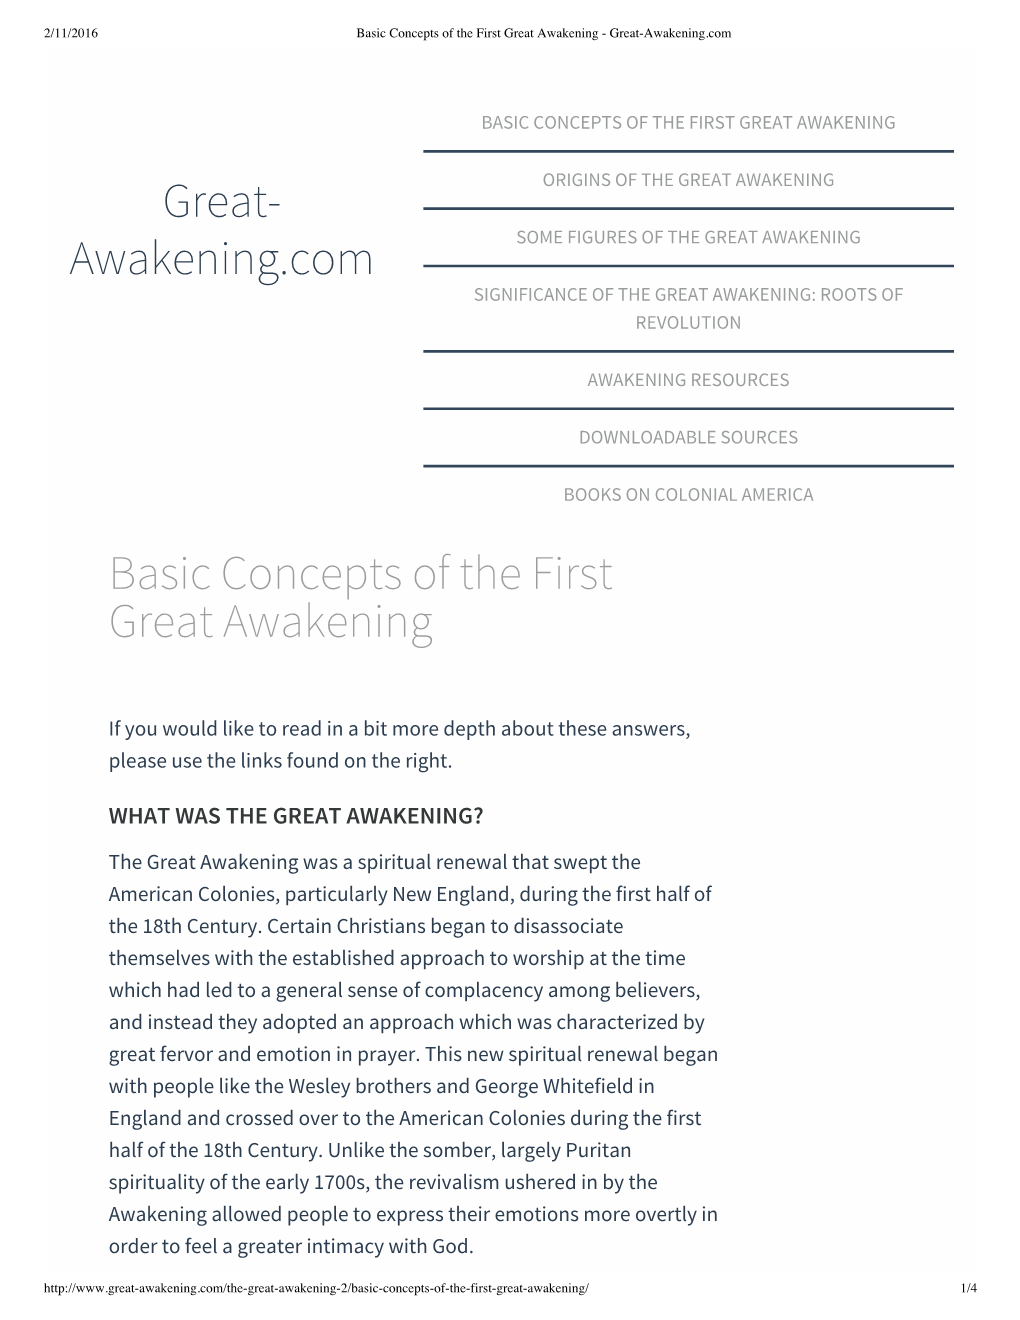 Basic Concepts of the First Great Awakening Great- Awakening.Com